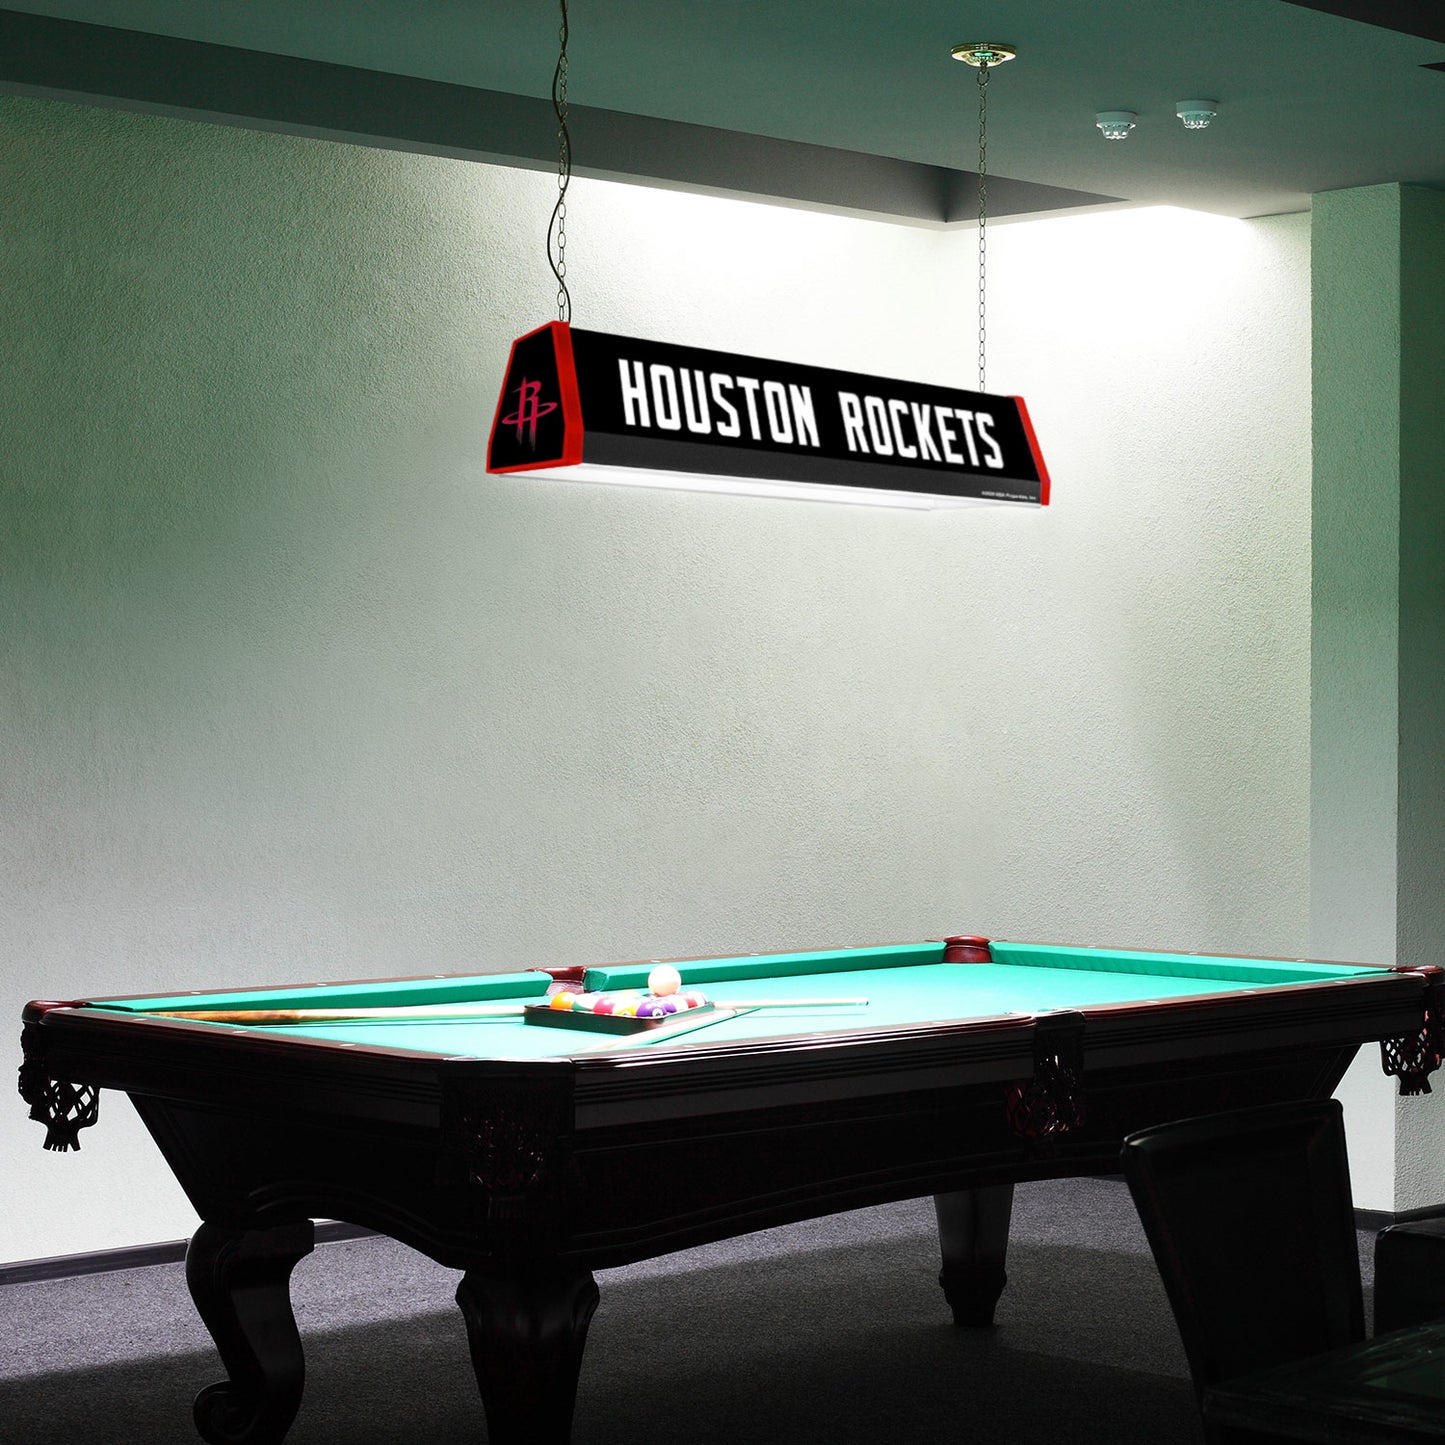 Houston Rockets Standard Pool Table Light Room View